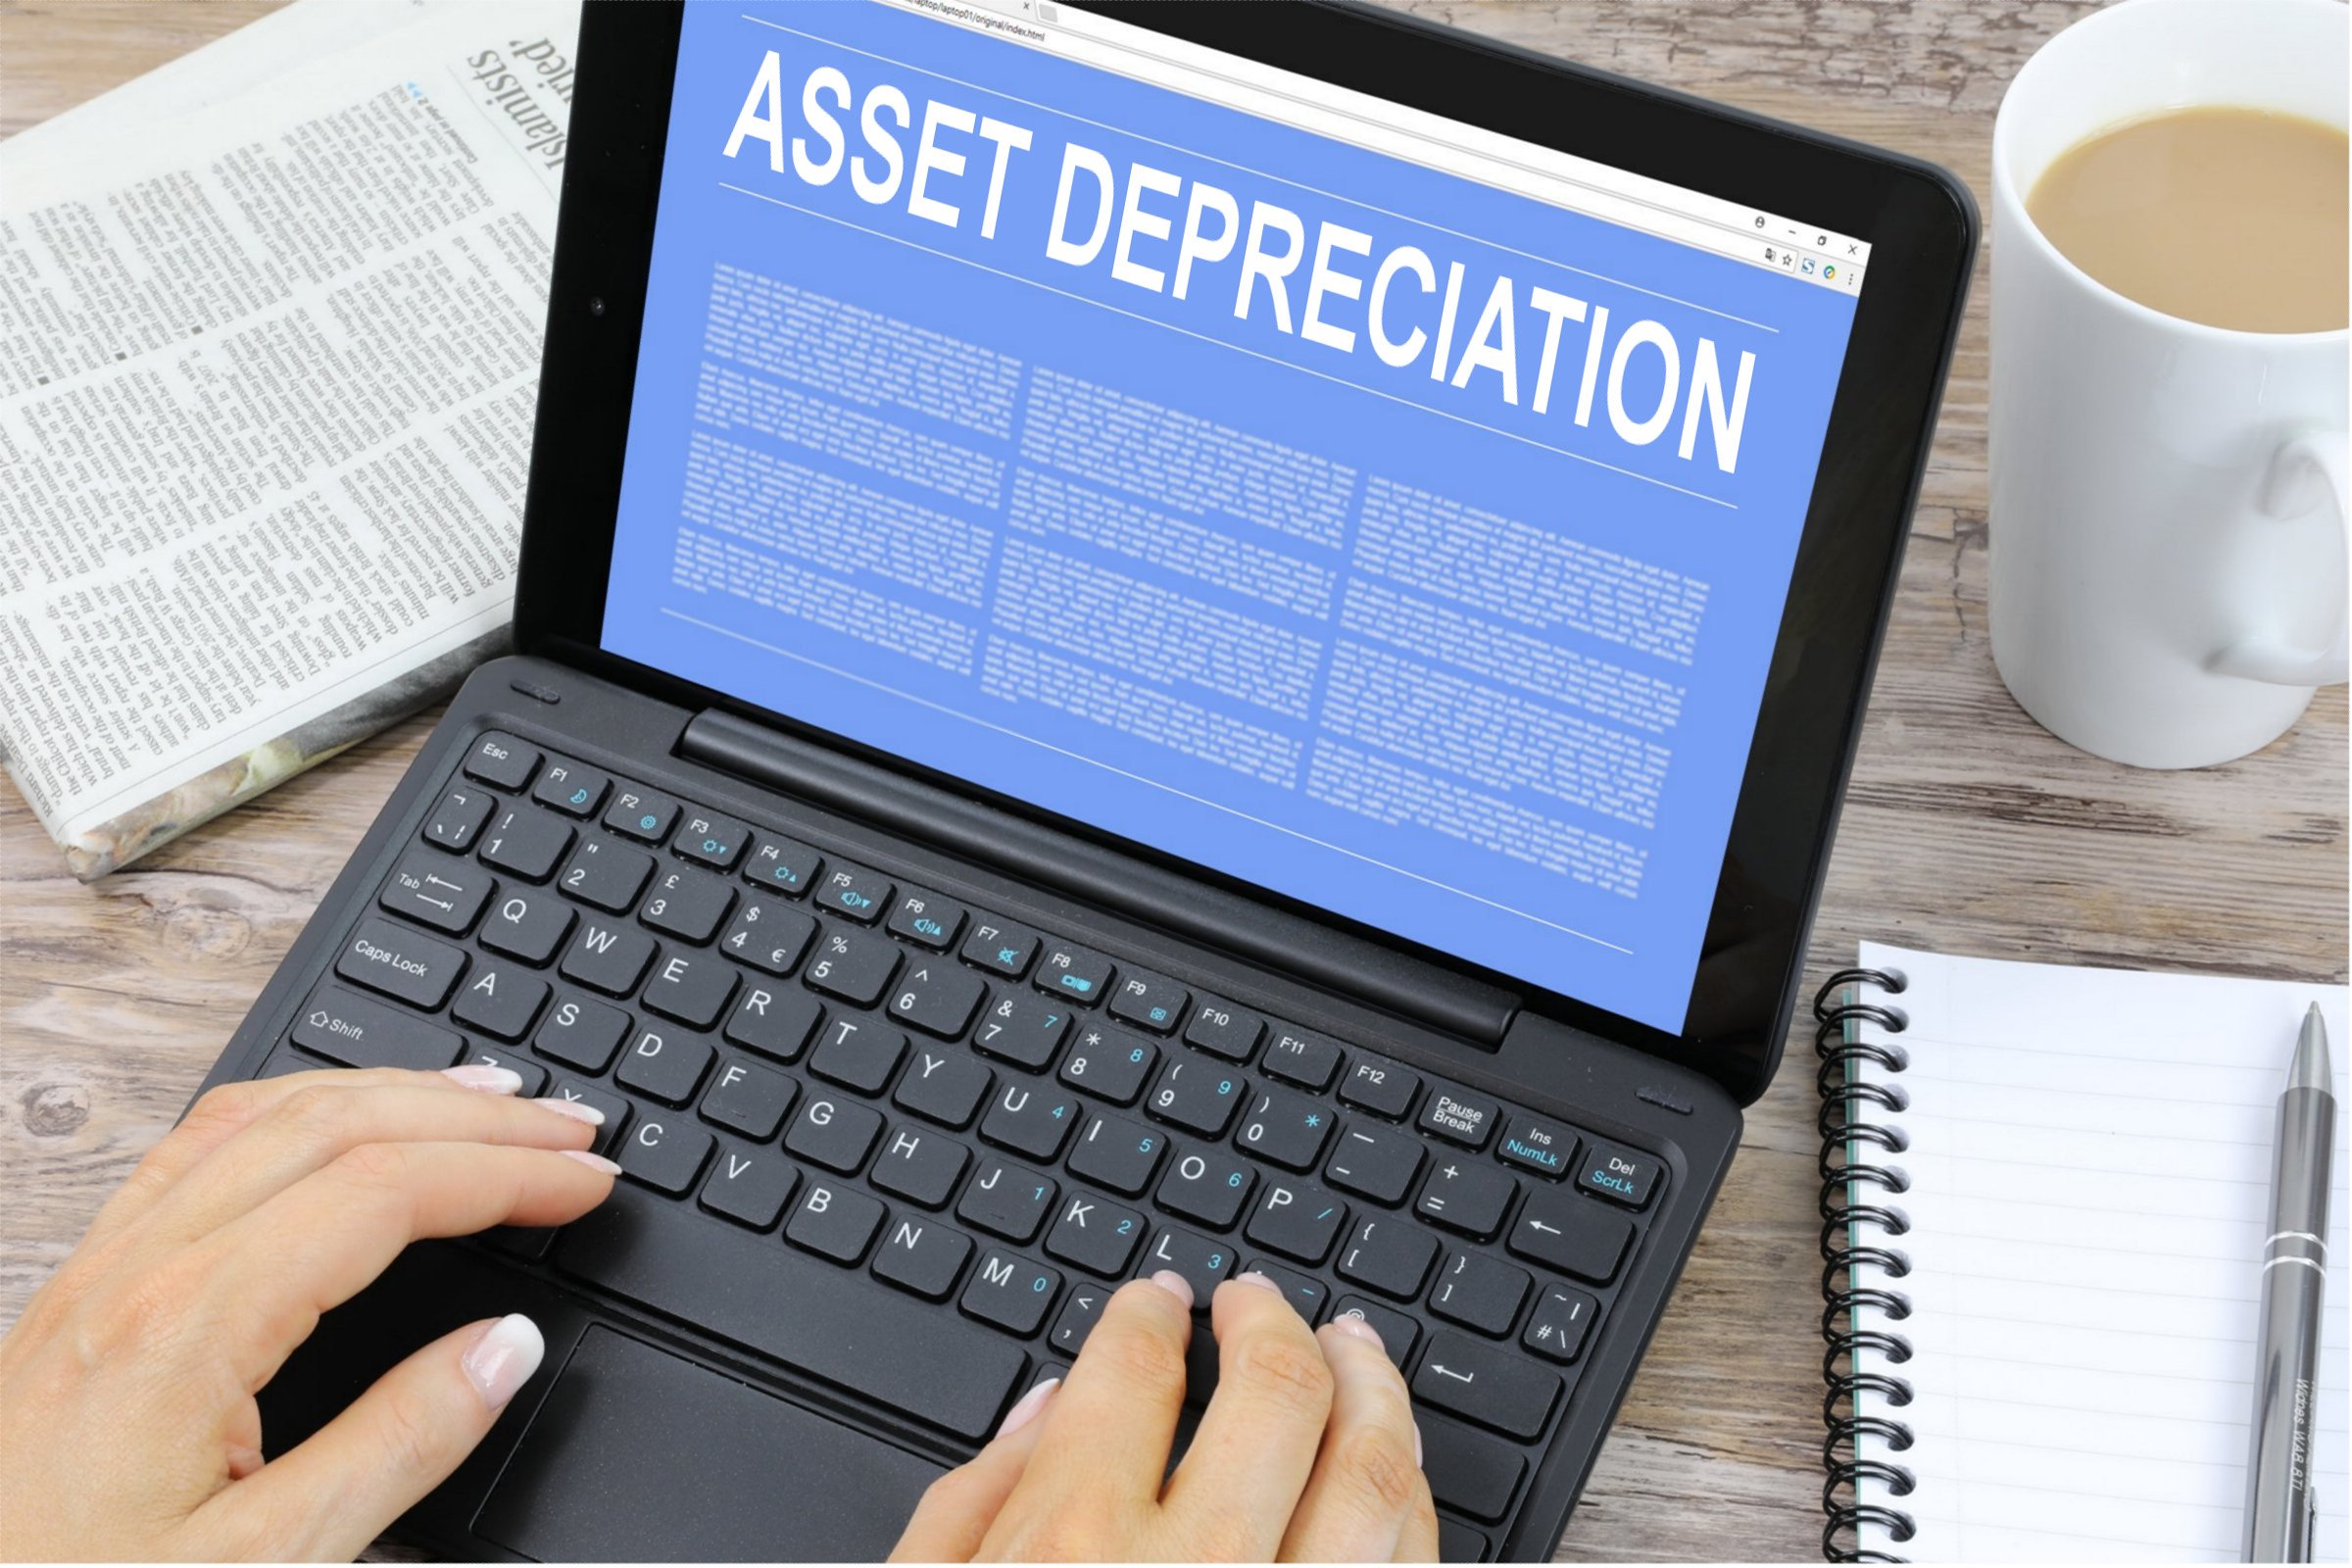 Asset Depreciation